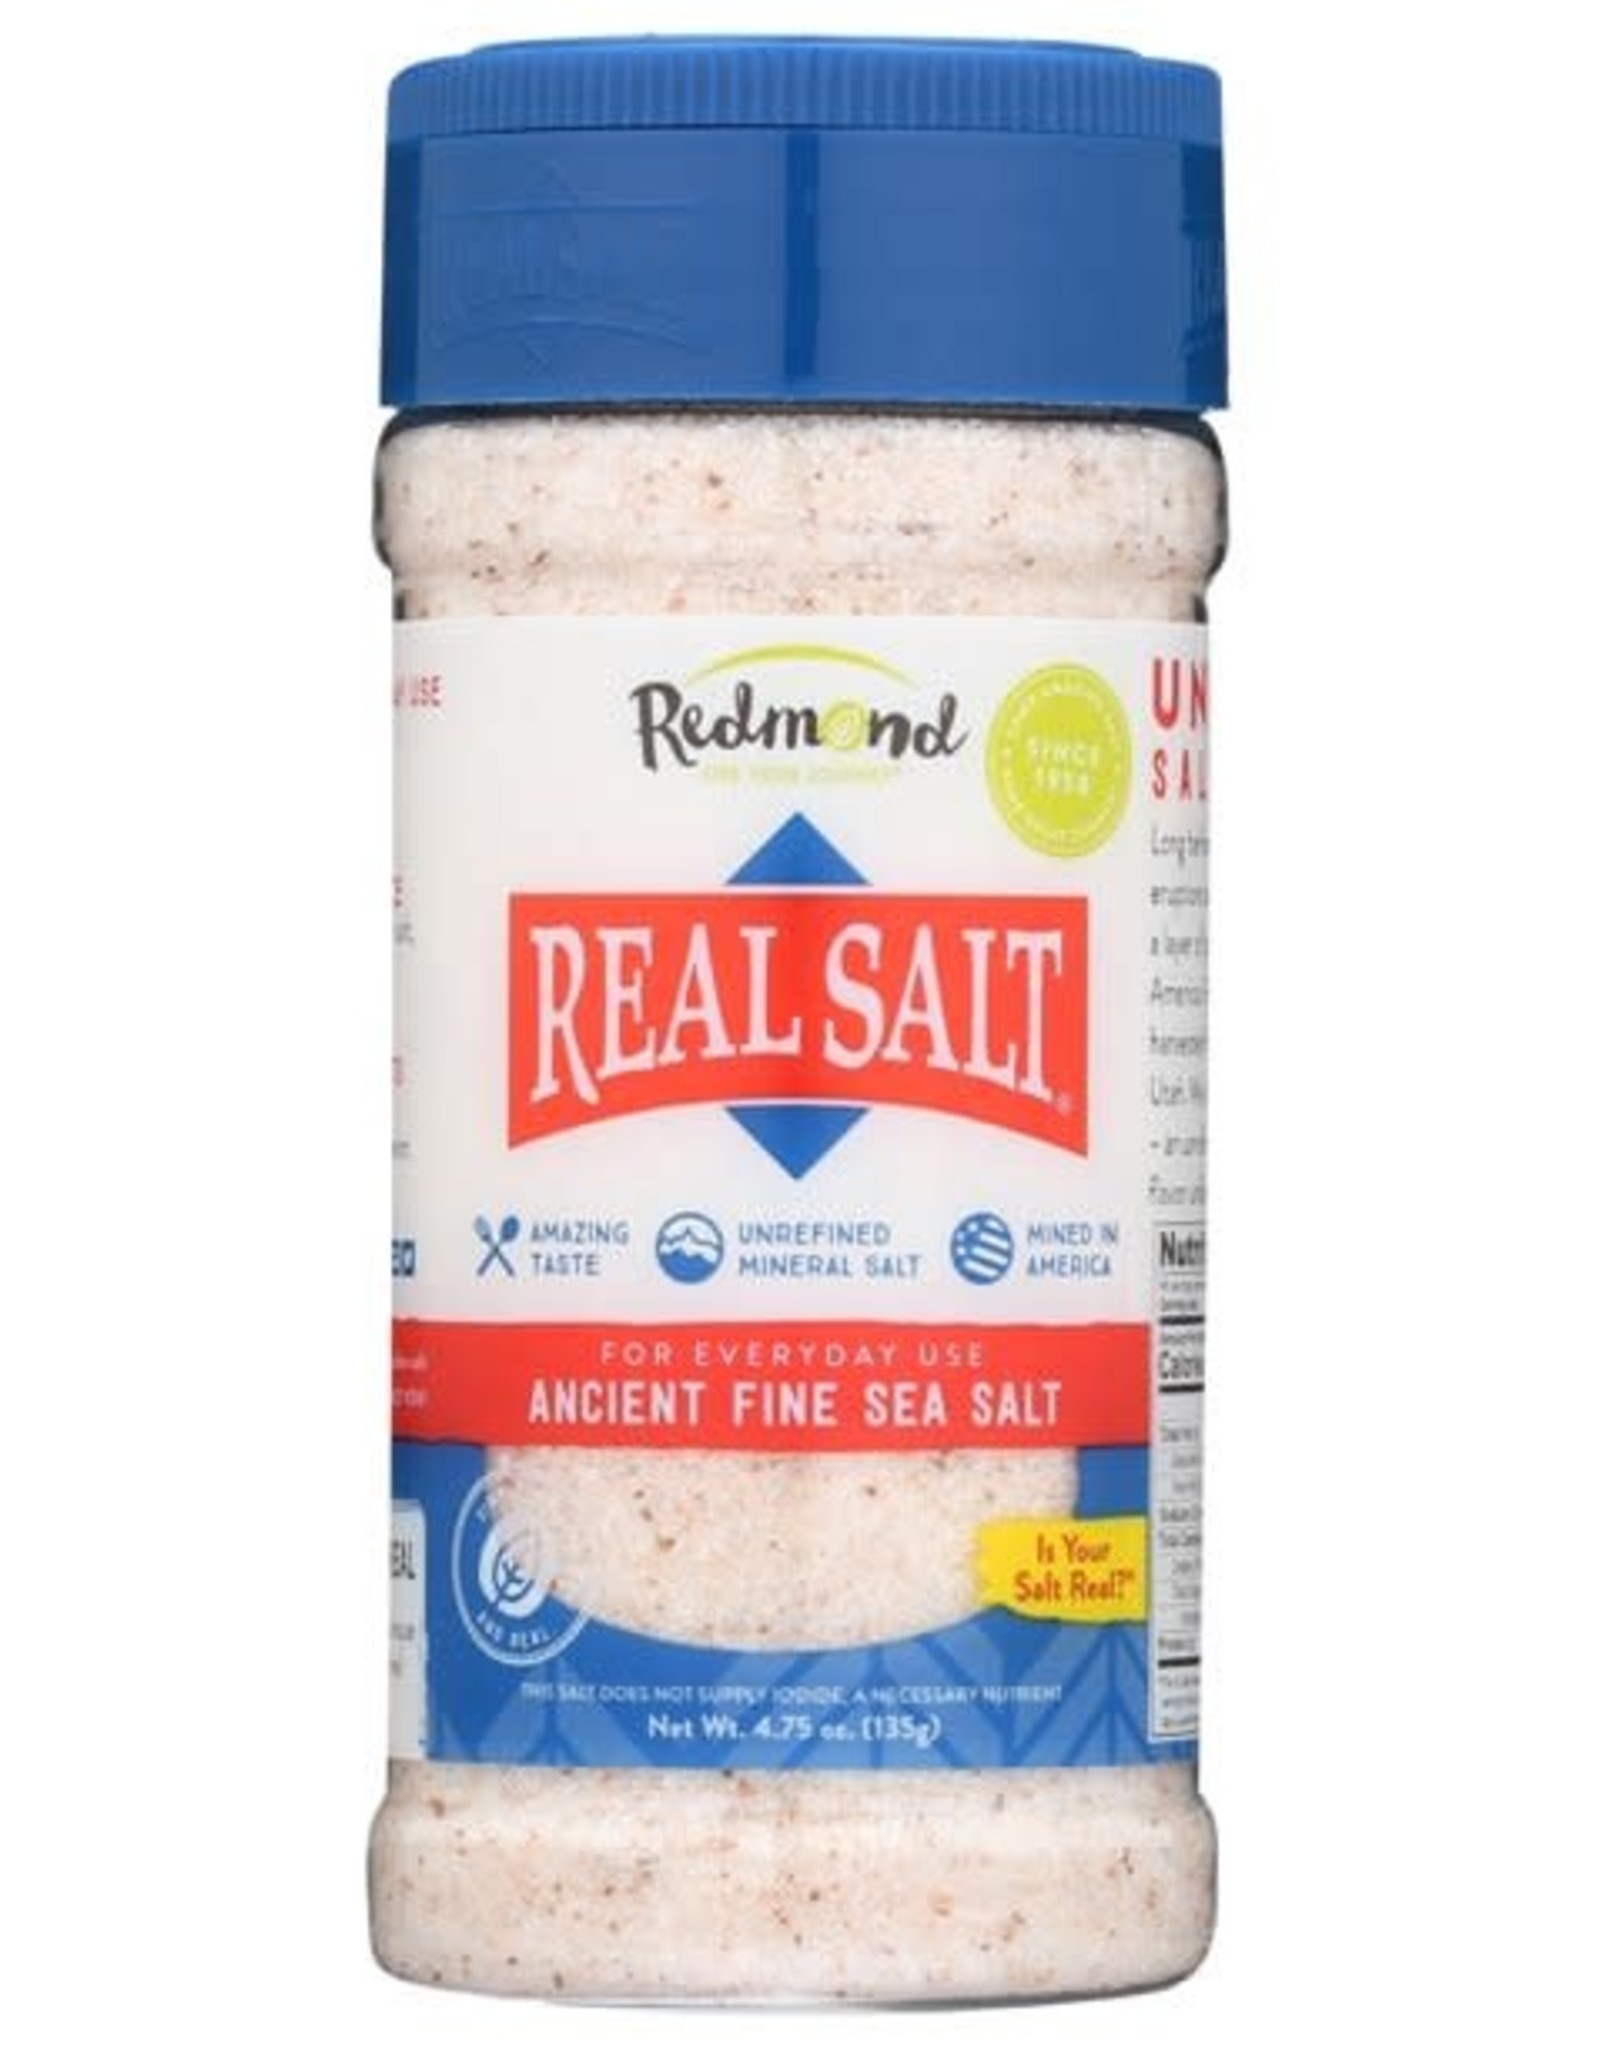 Real Salt Real Salt - Redmond